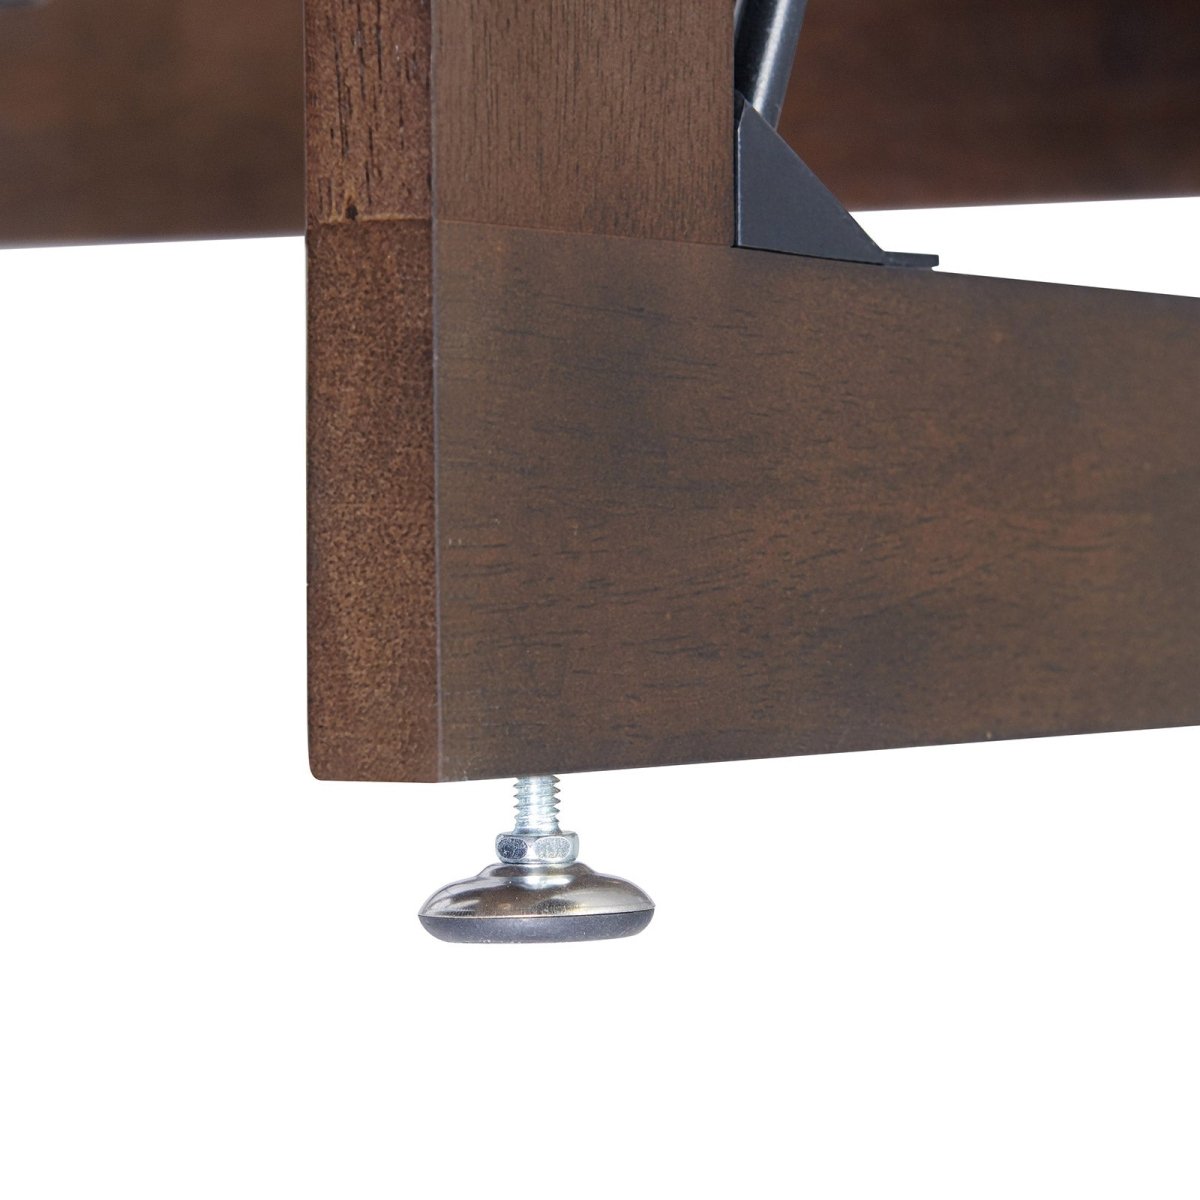 Stakmore Pre-Assembled Wood Folding Desk - Alpine Outlets